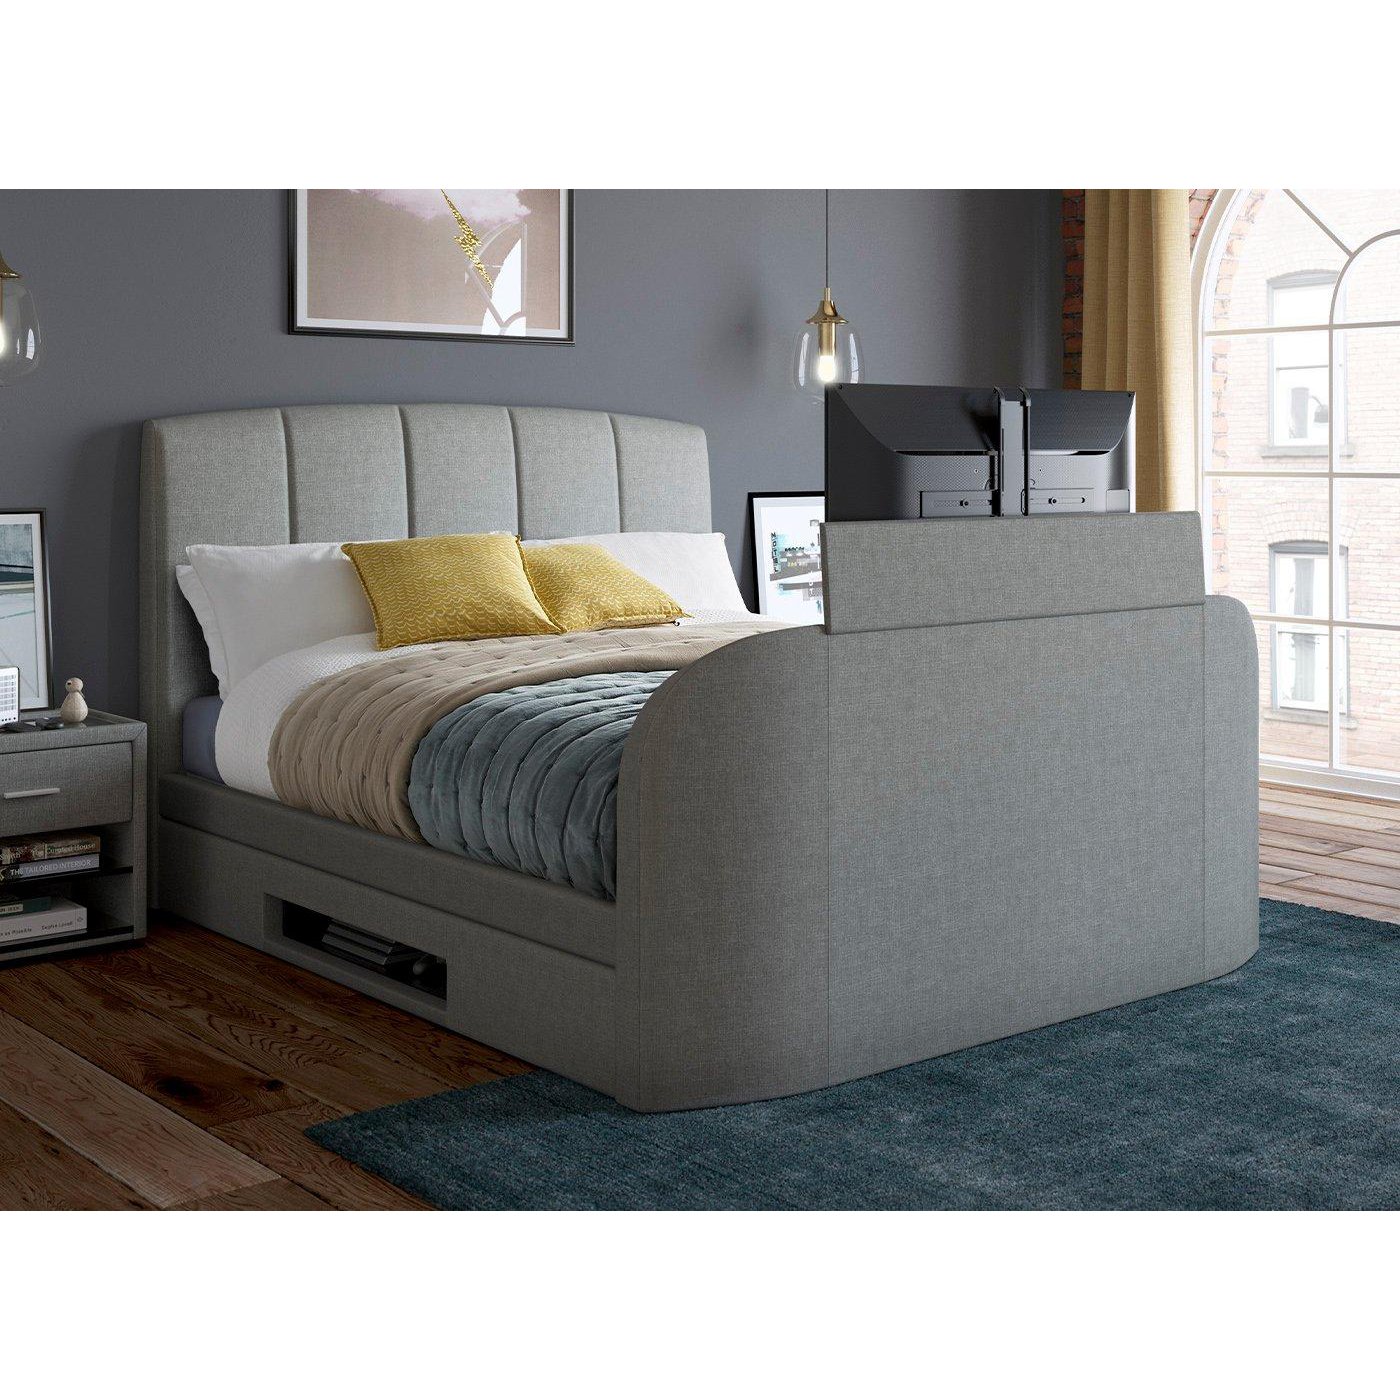 Seoul Upholstered TV Bed Frame - 5'0 King - Grey